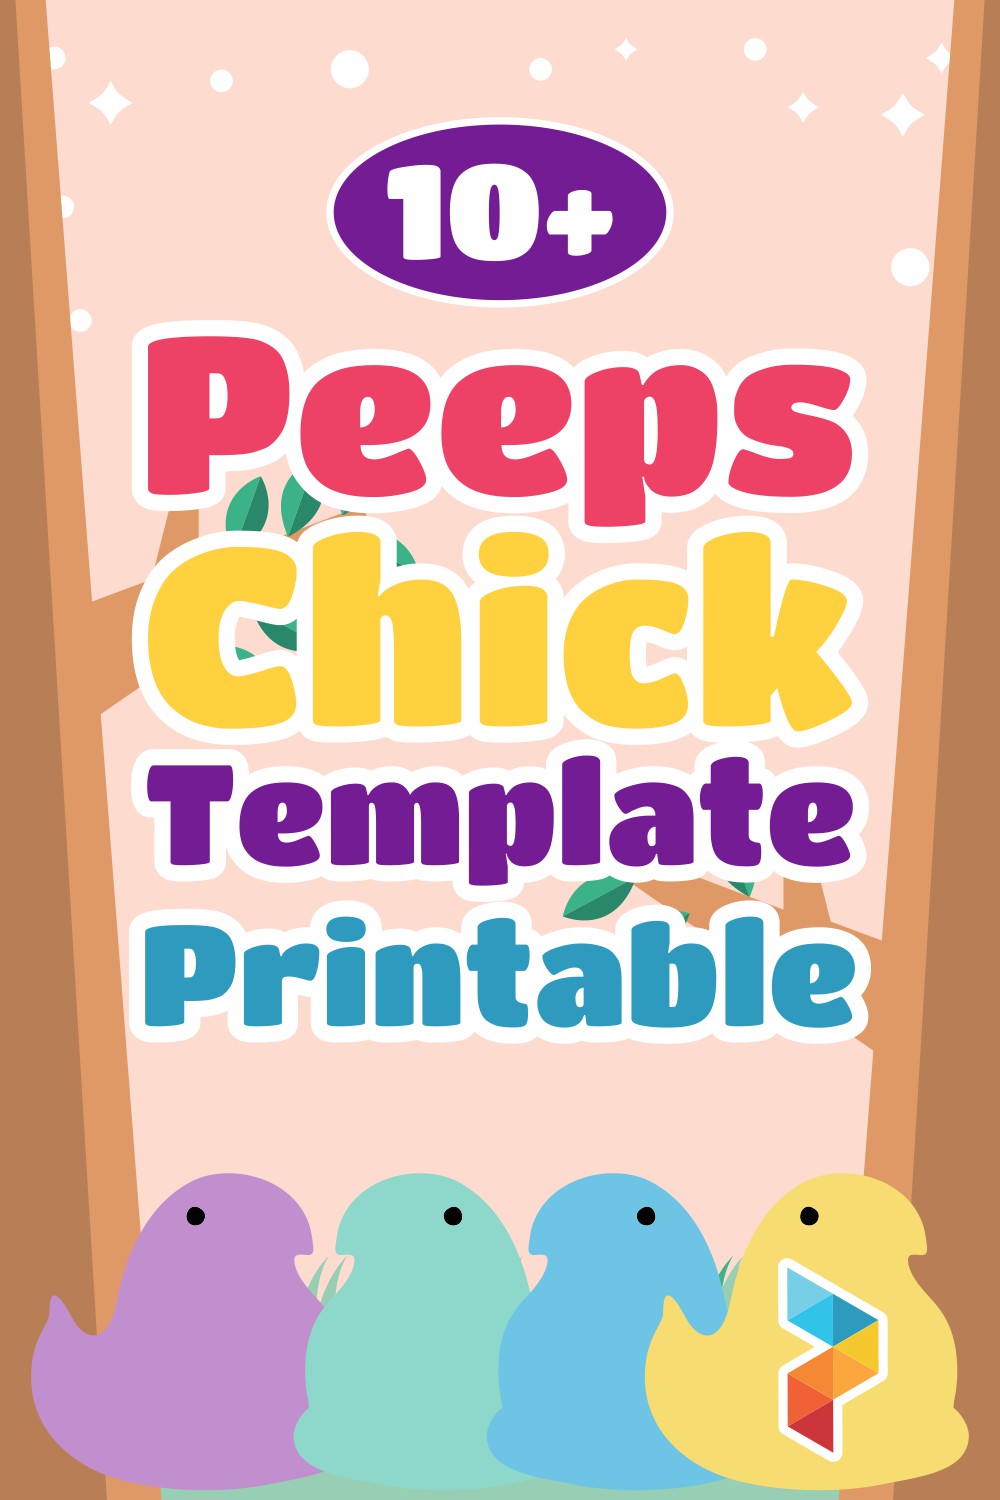 Peeps Chick Template